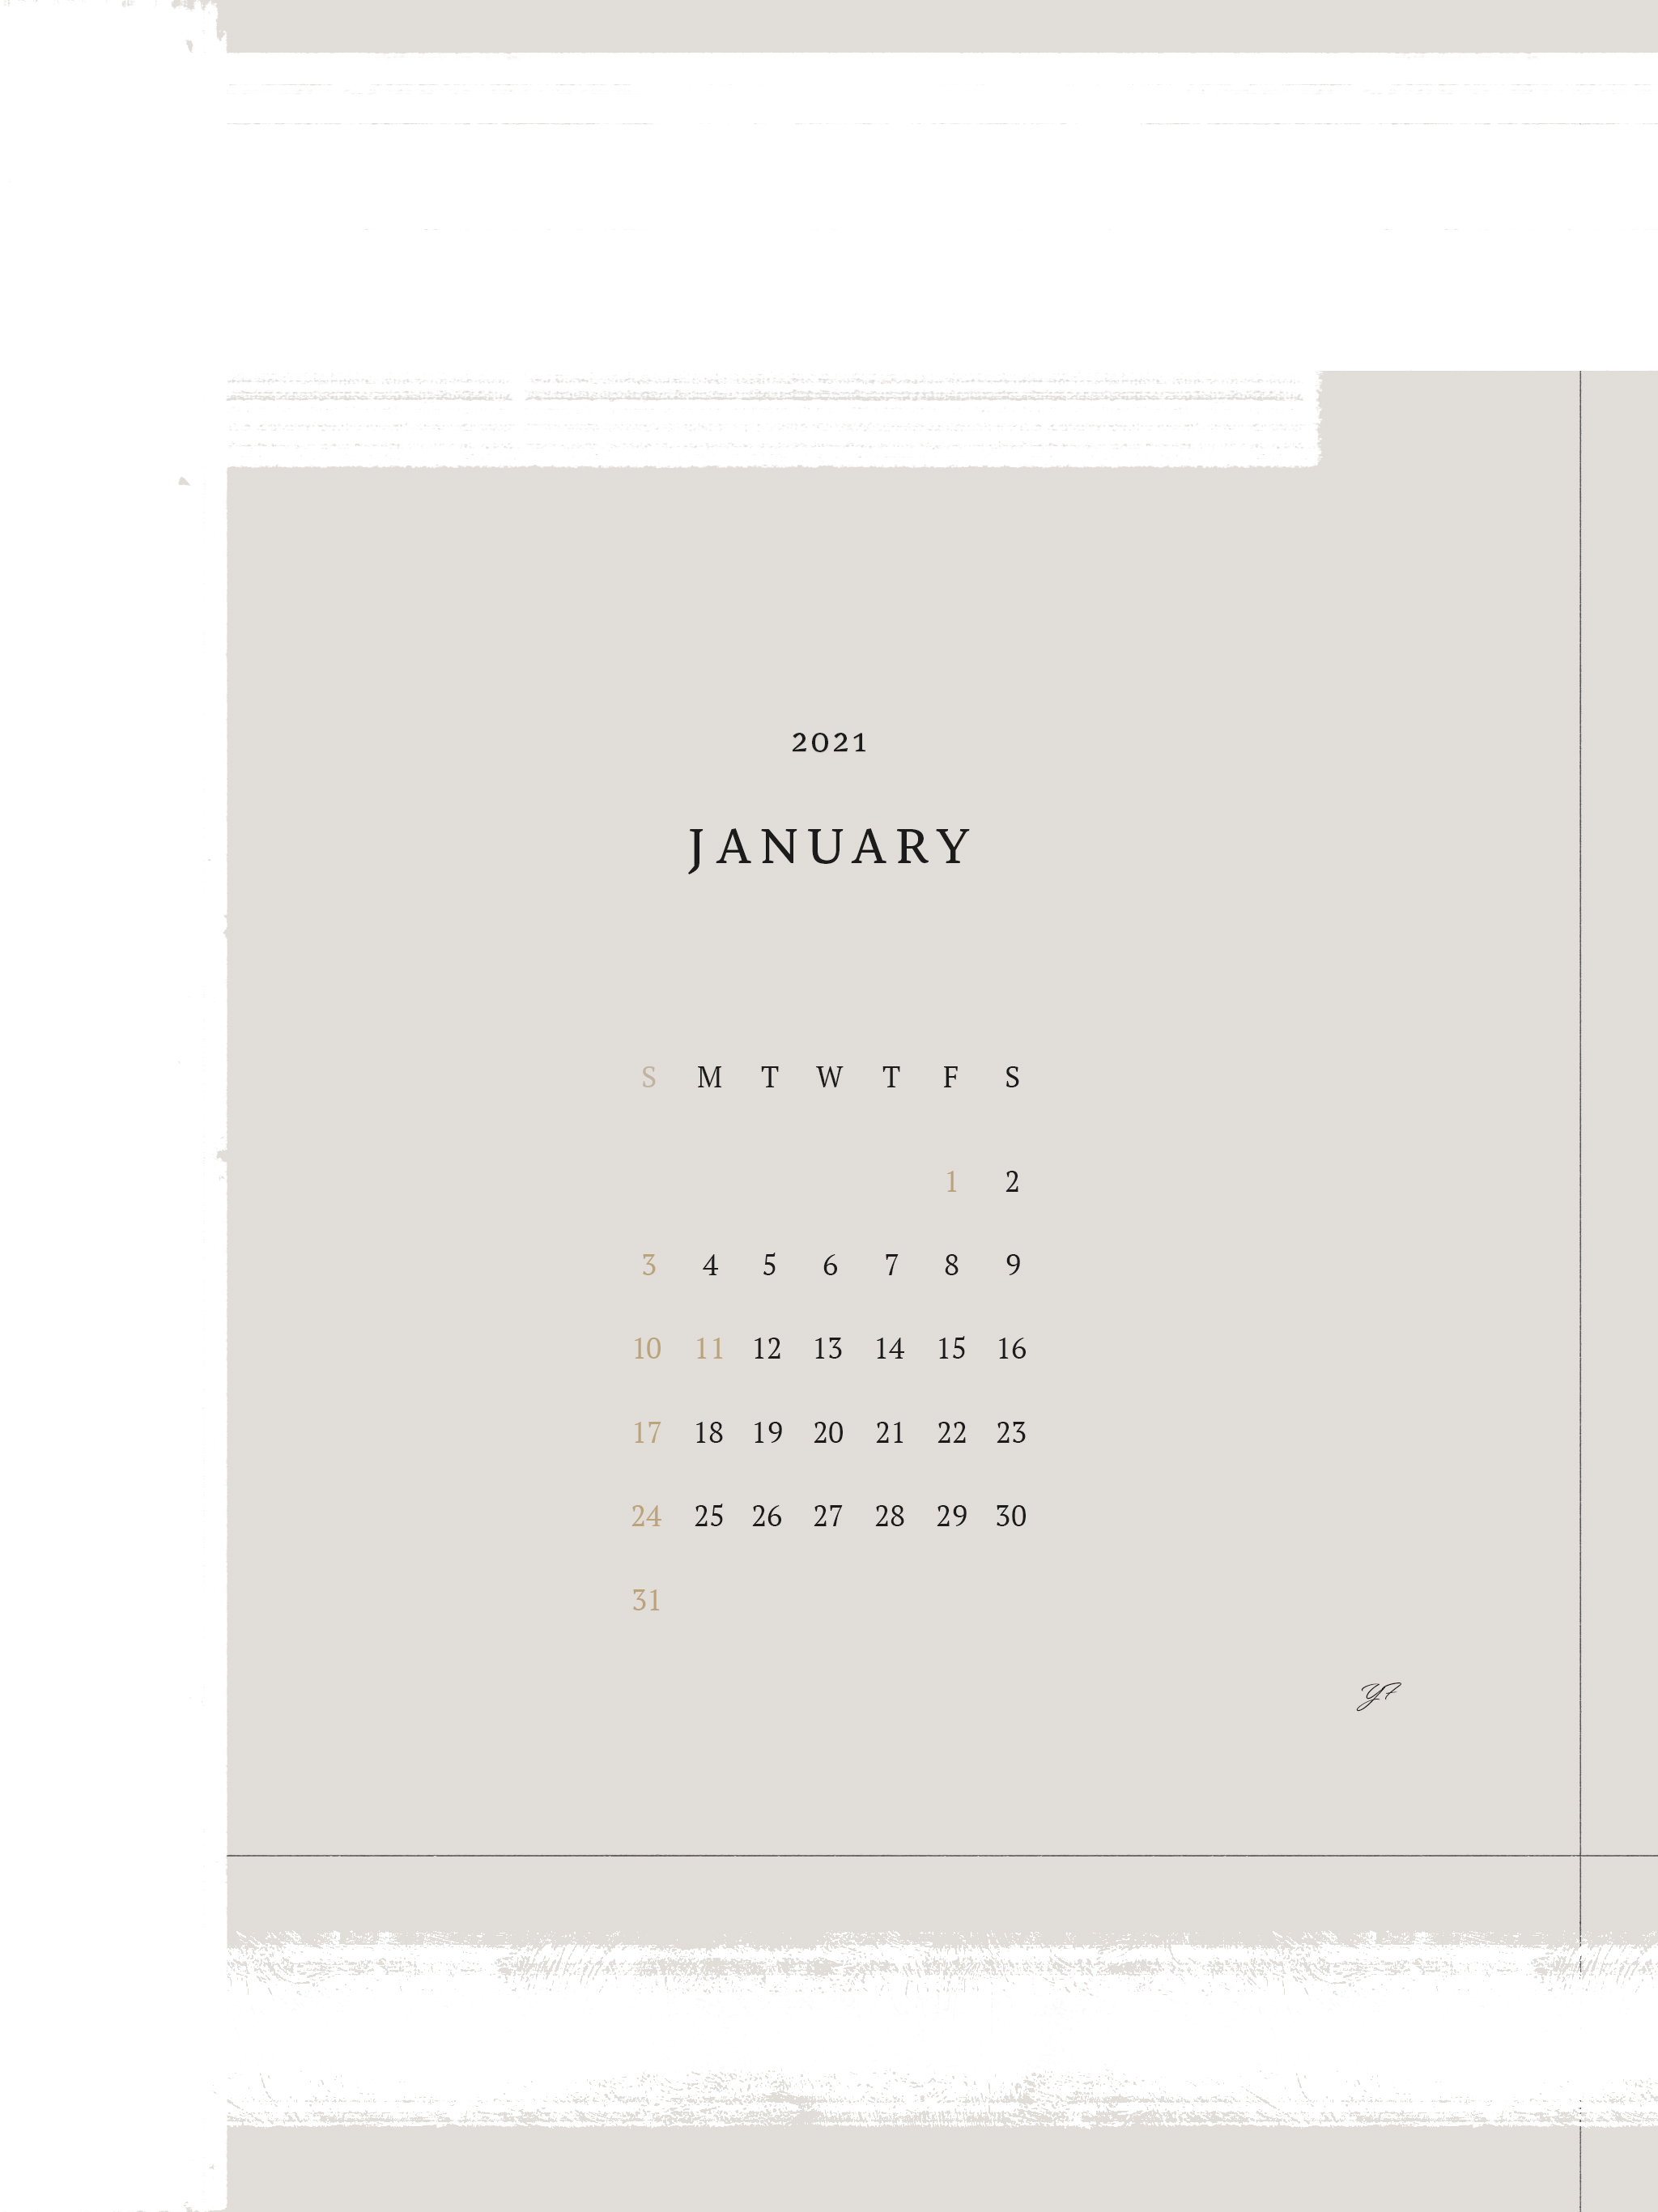 January 21 Calendar Wallpaper For The Ipad Design By Yf